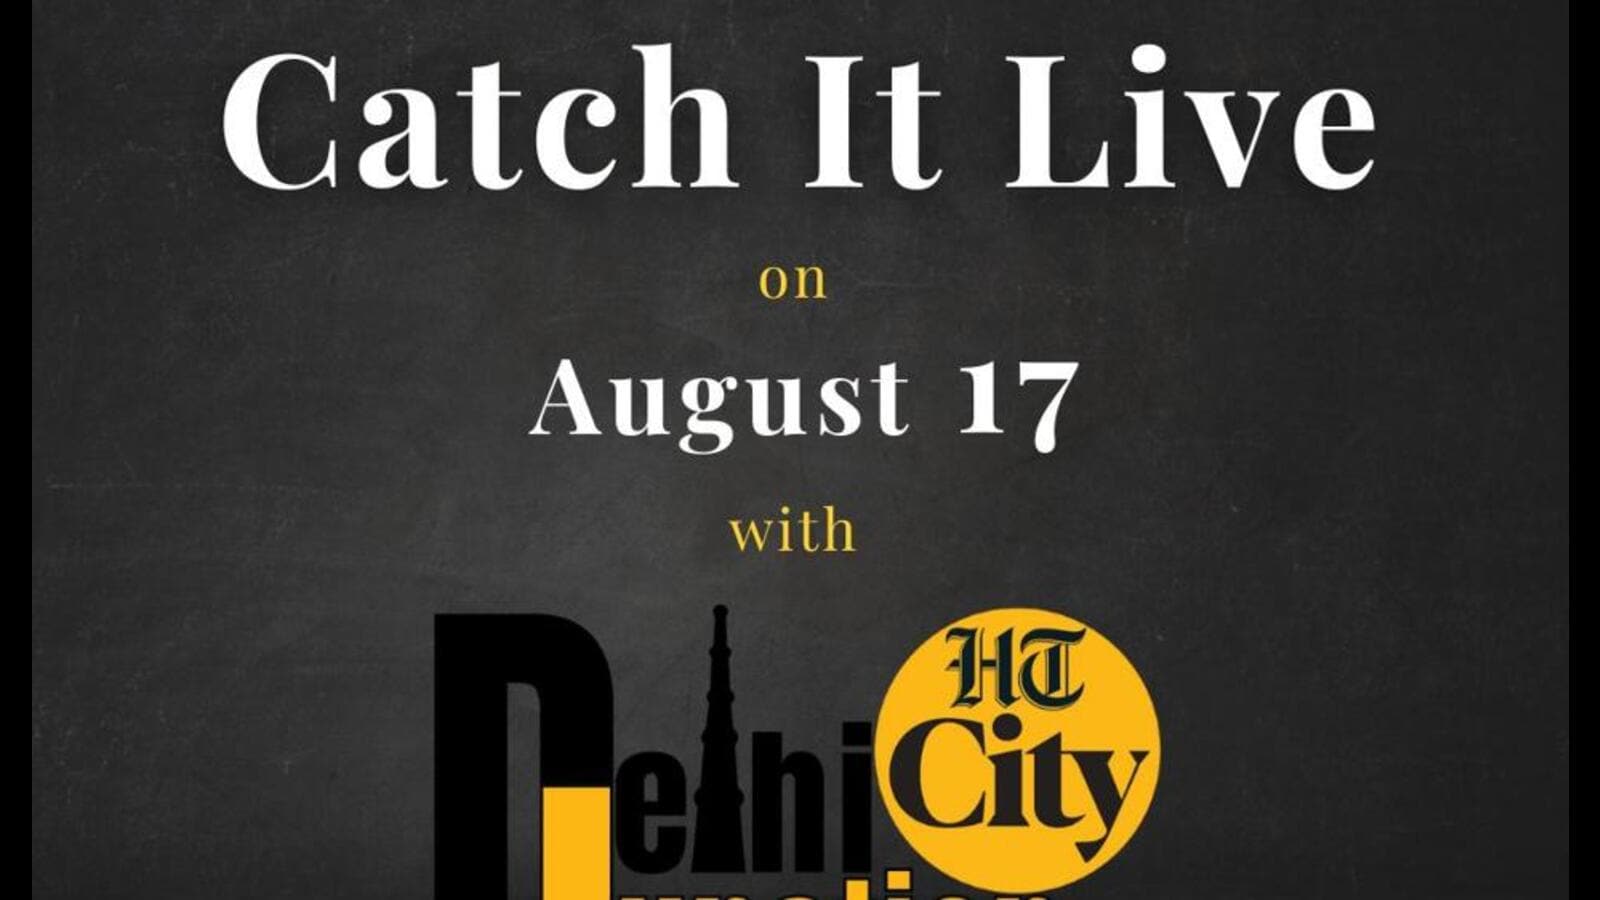 HT City Delhi Junction: Catch it live on August 17